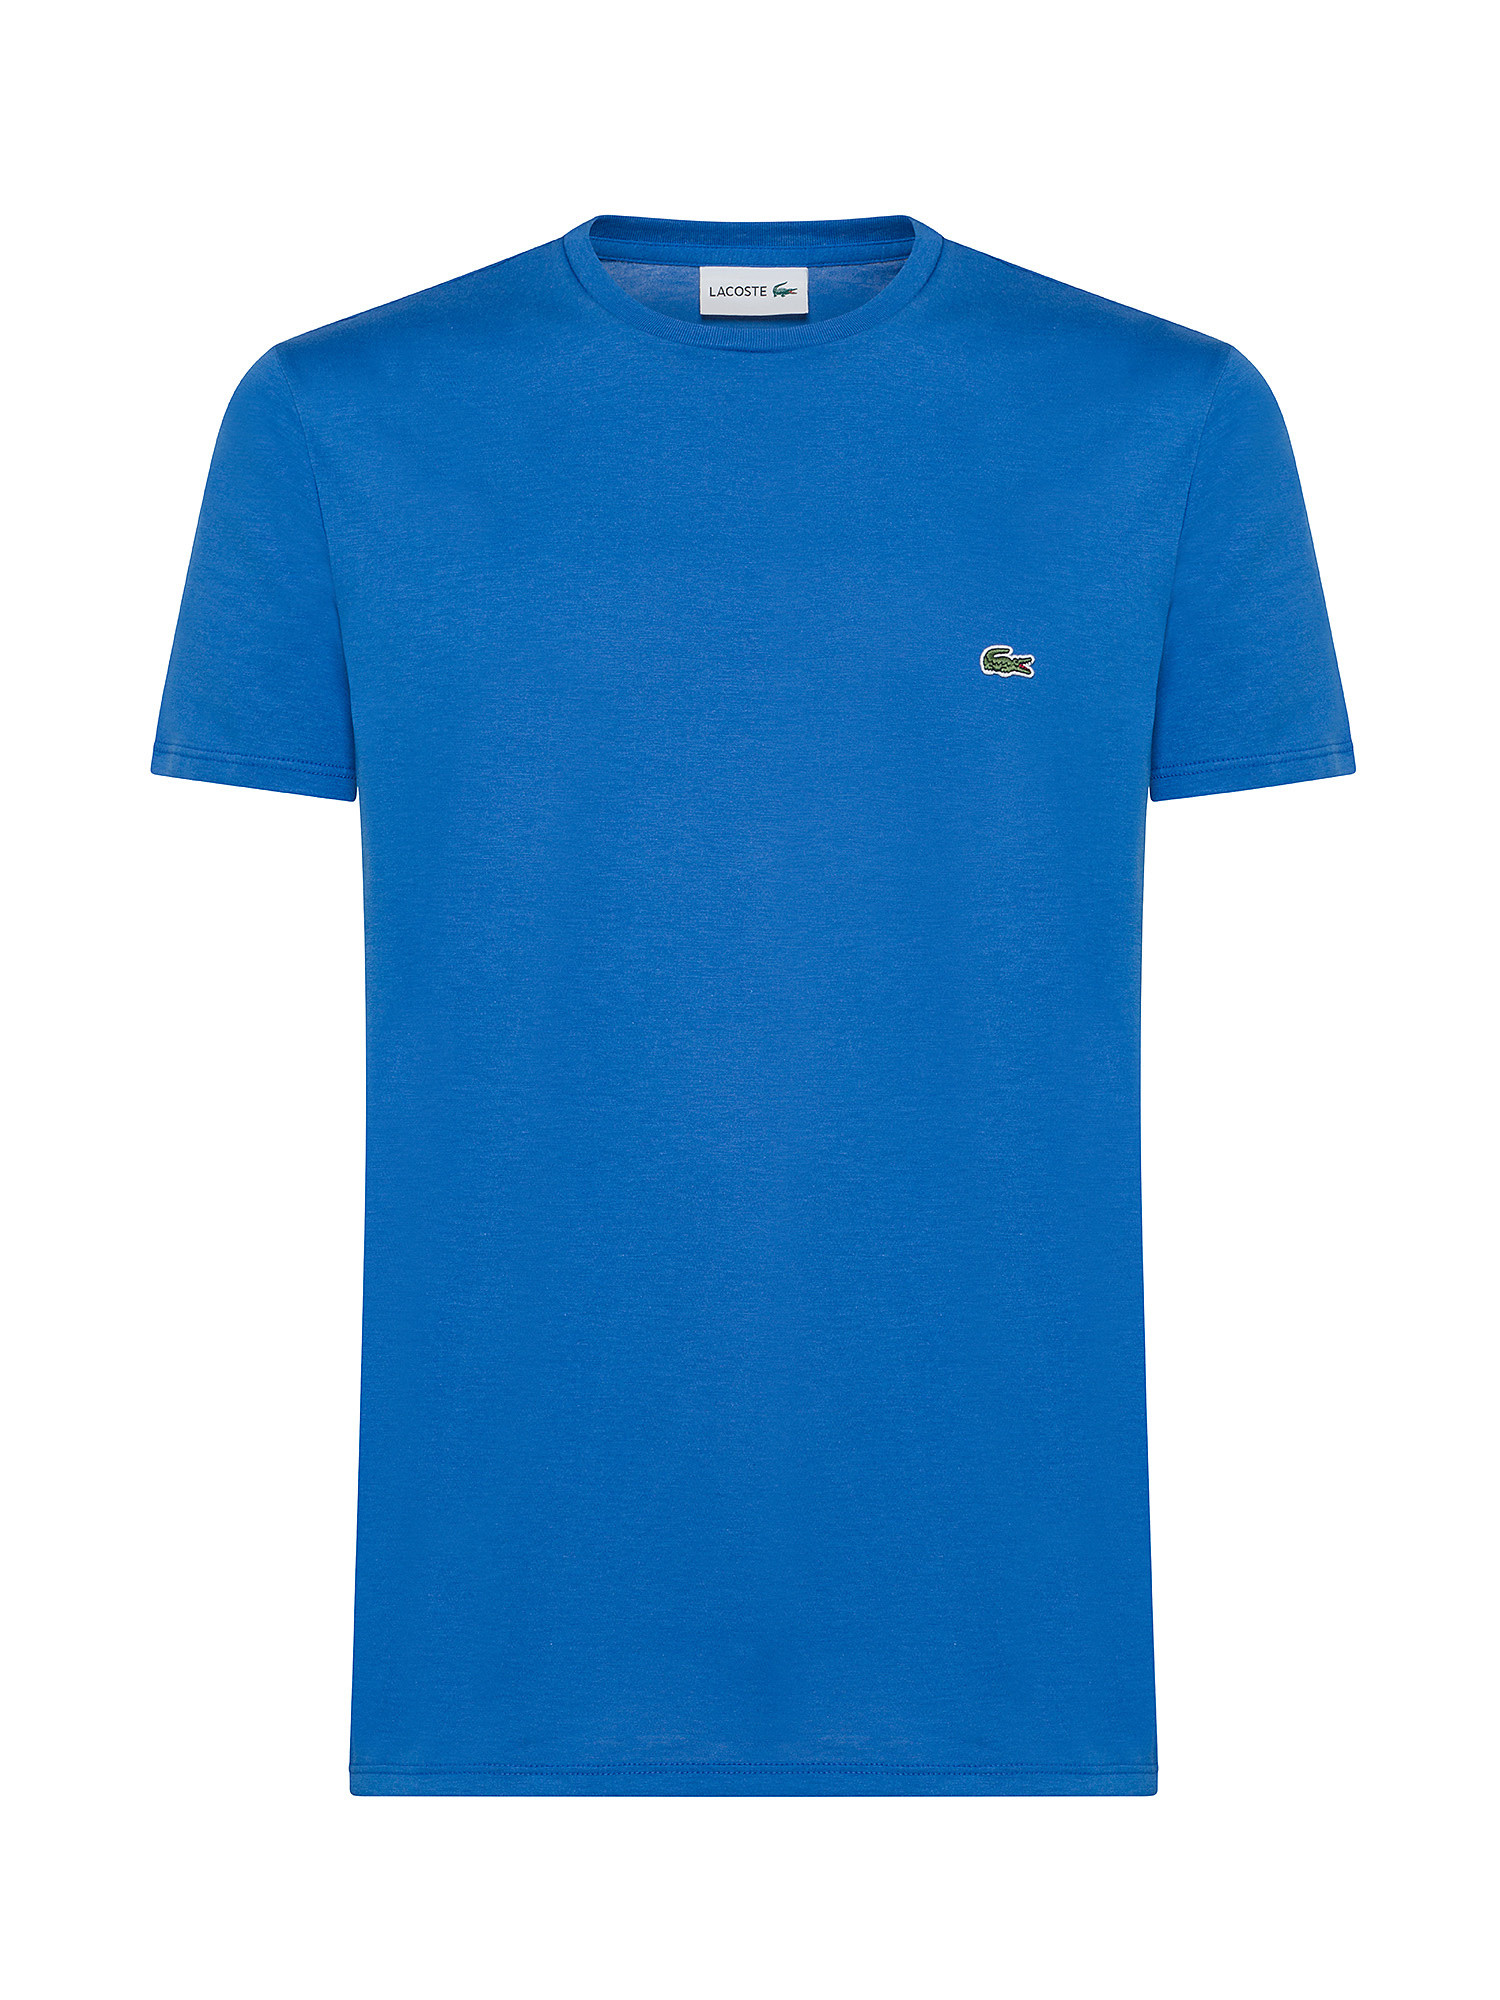 Lacoste - T-shirt girocollo in jersey di cotone Pima, Blu, large image number 0